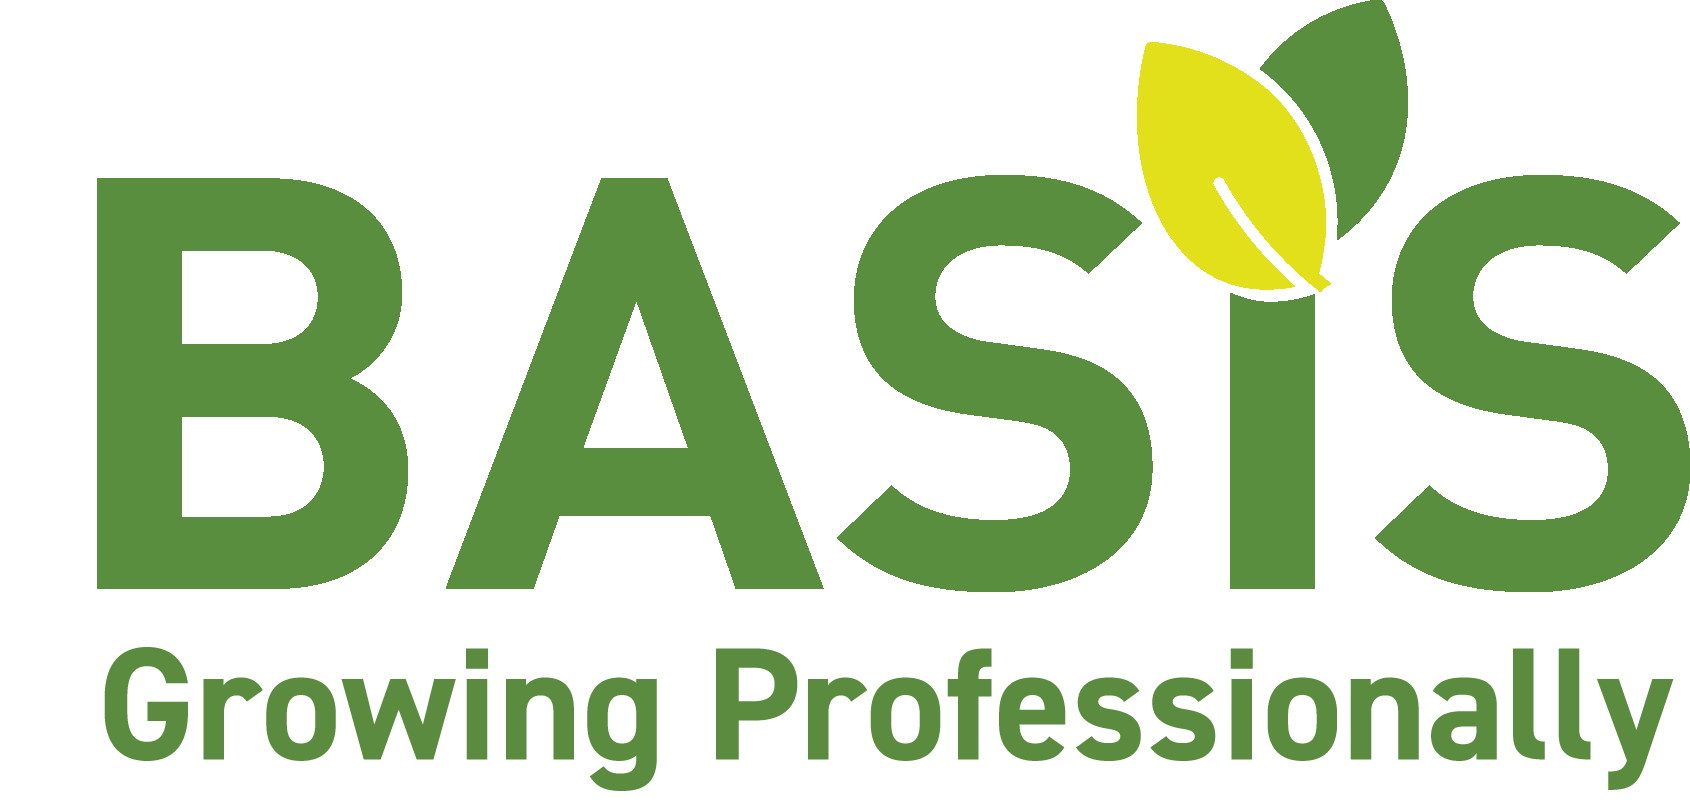 BASIS logo for sponsor page